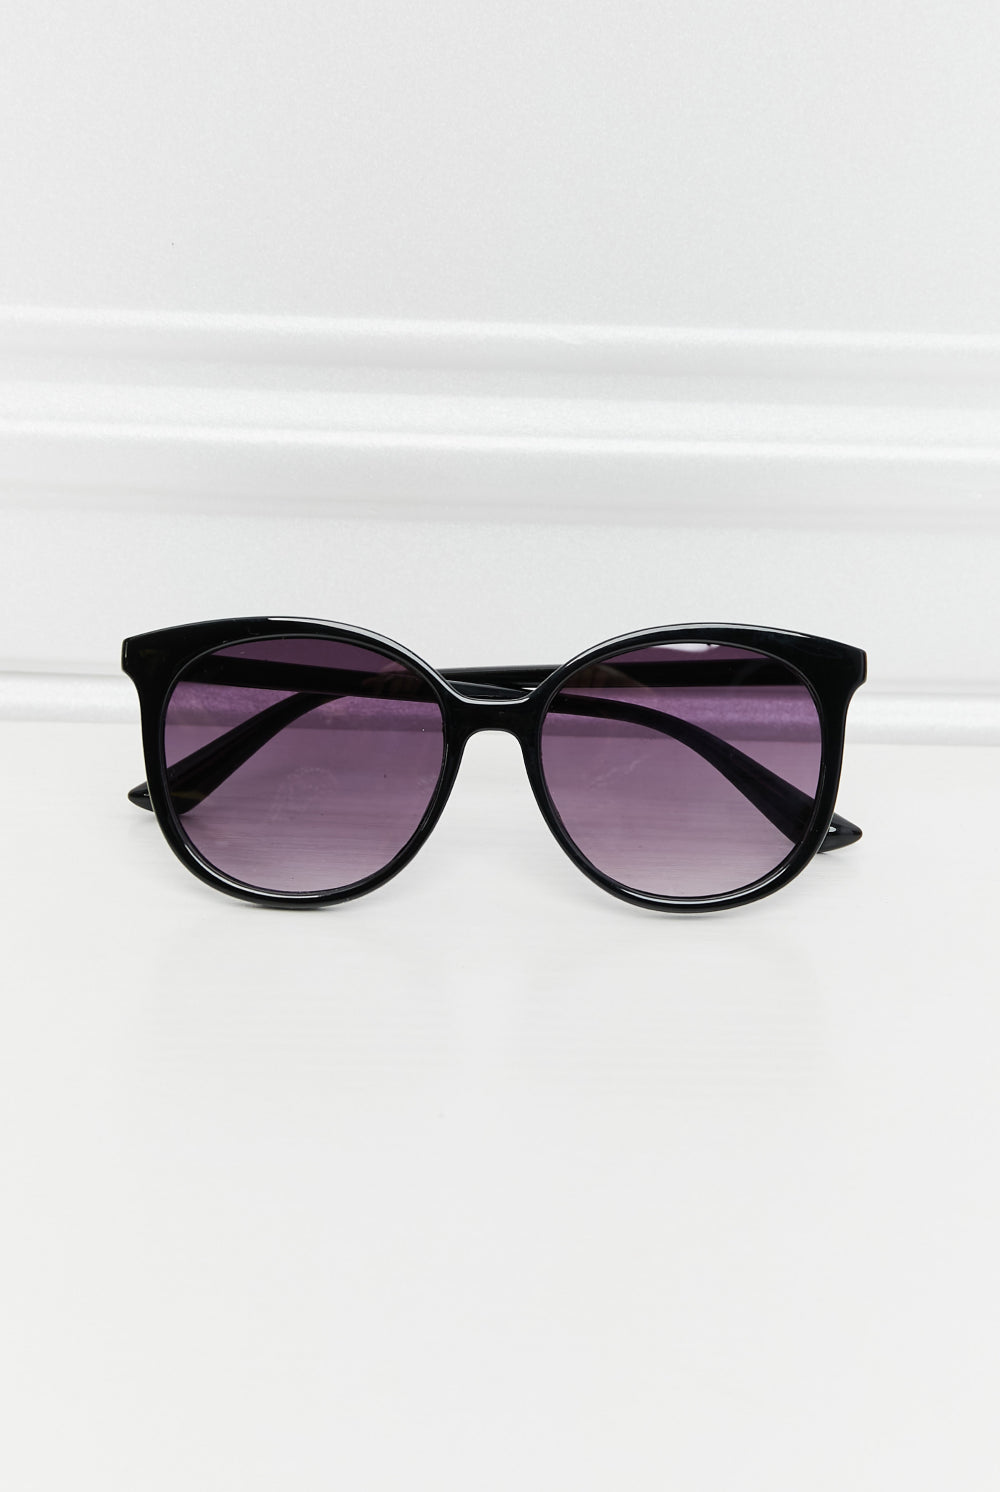 Lavender No Winter Lasts Forever Polycarbonate Frame Full Rim Sunglasses Sunglasses